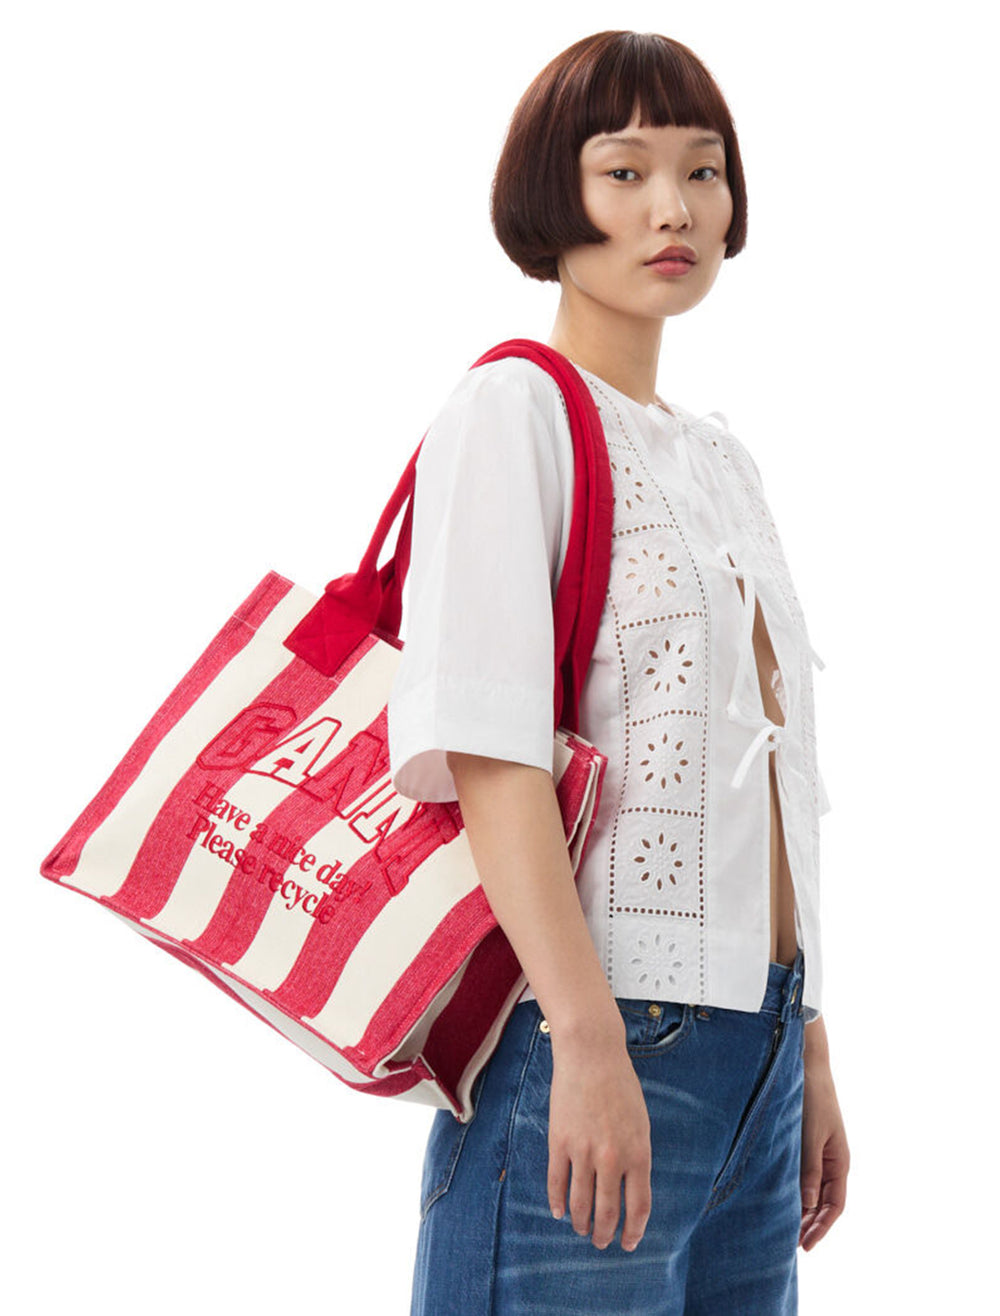 Mdel wearing GANNI's large easy shopper in barbados cherry stripe on her shoulder.